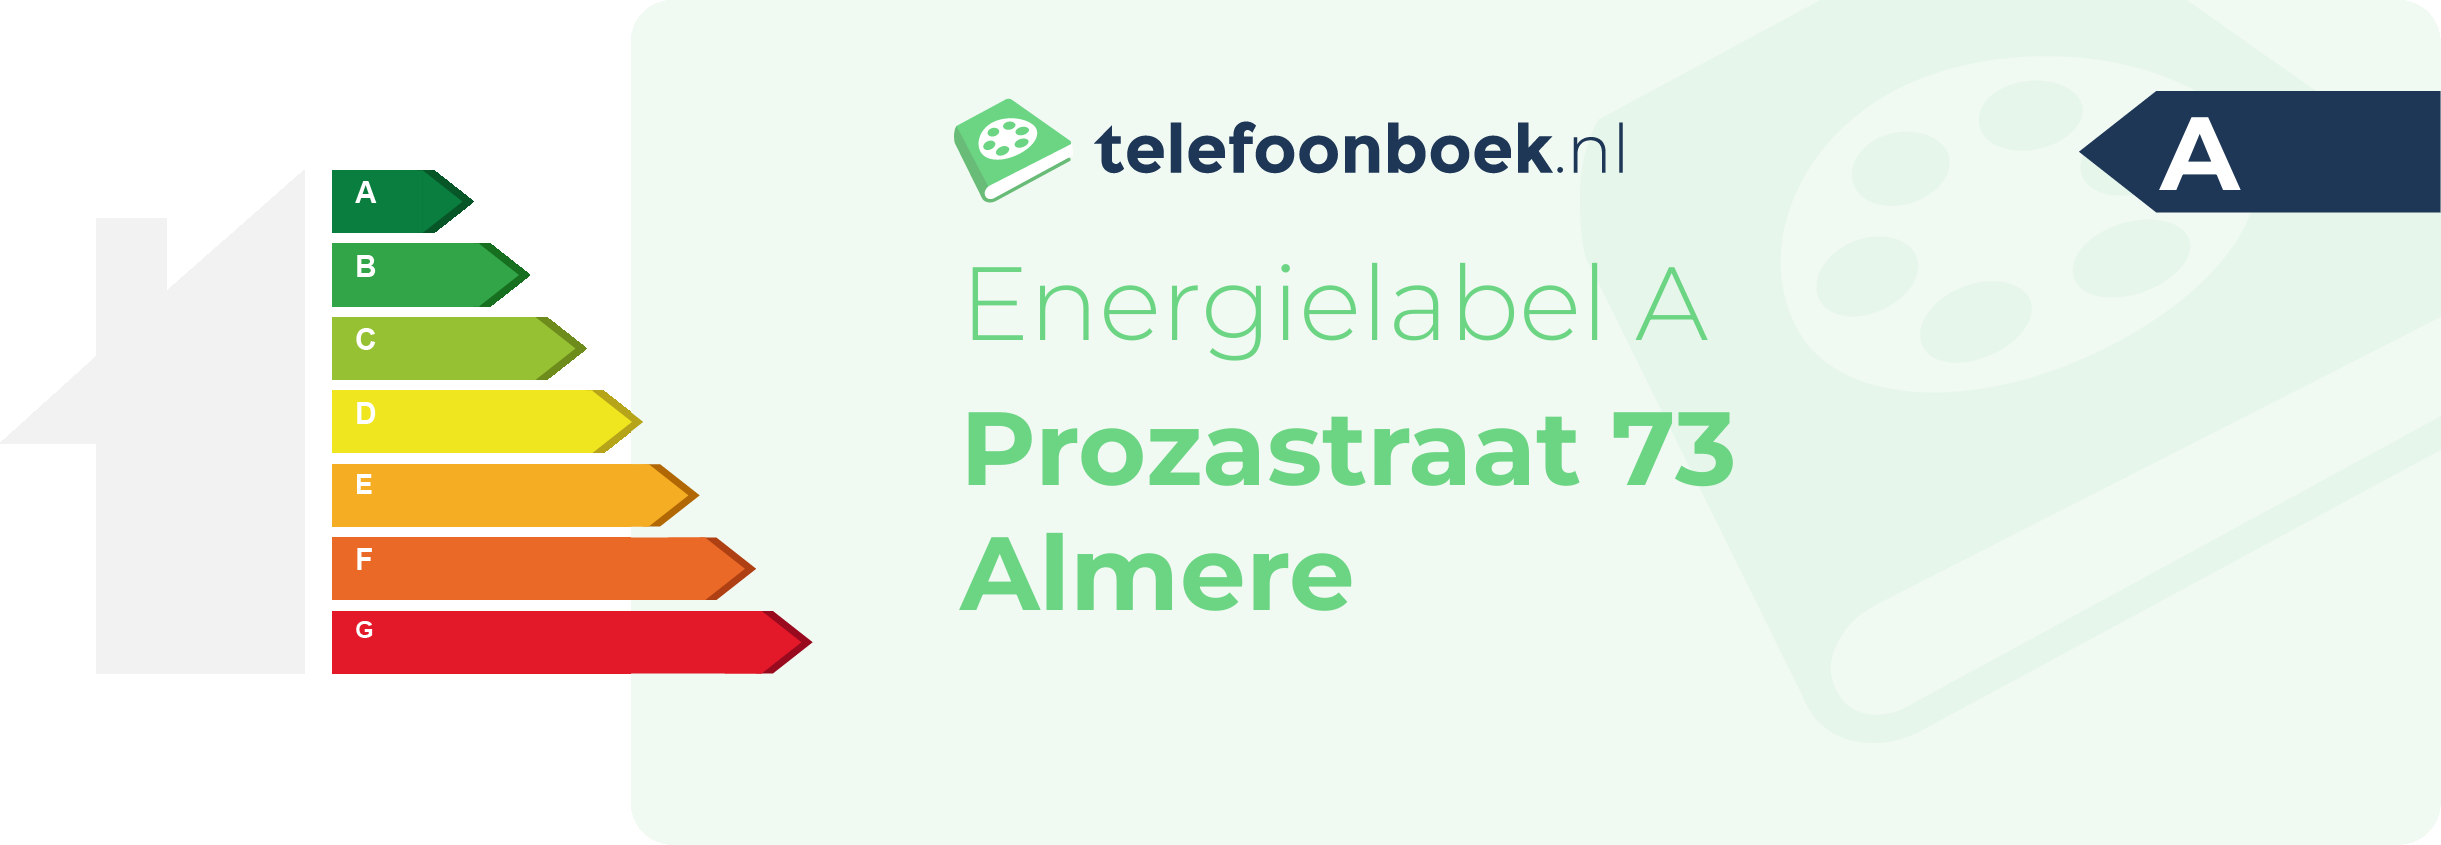 Energielabel Prozastraat 73 Almere